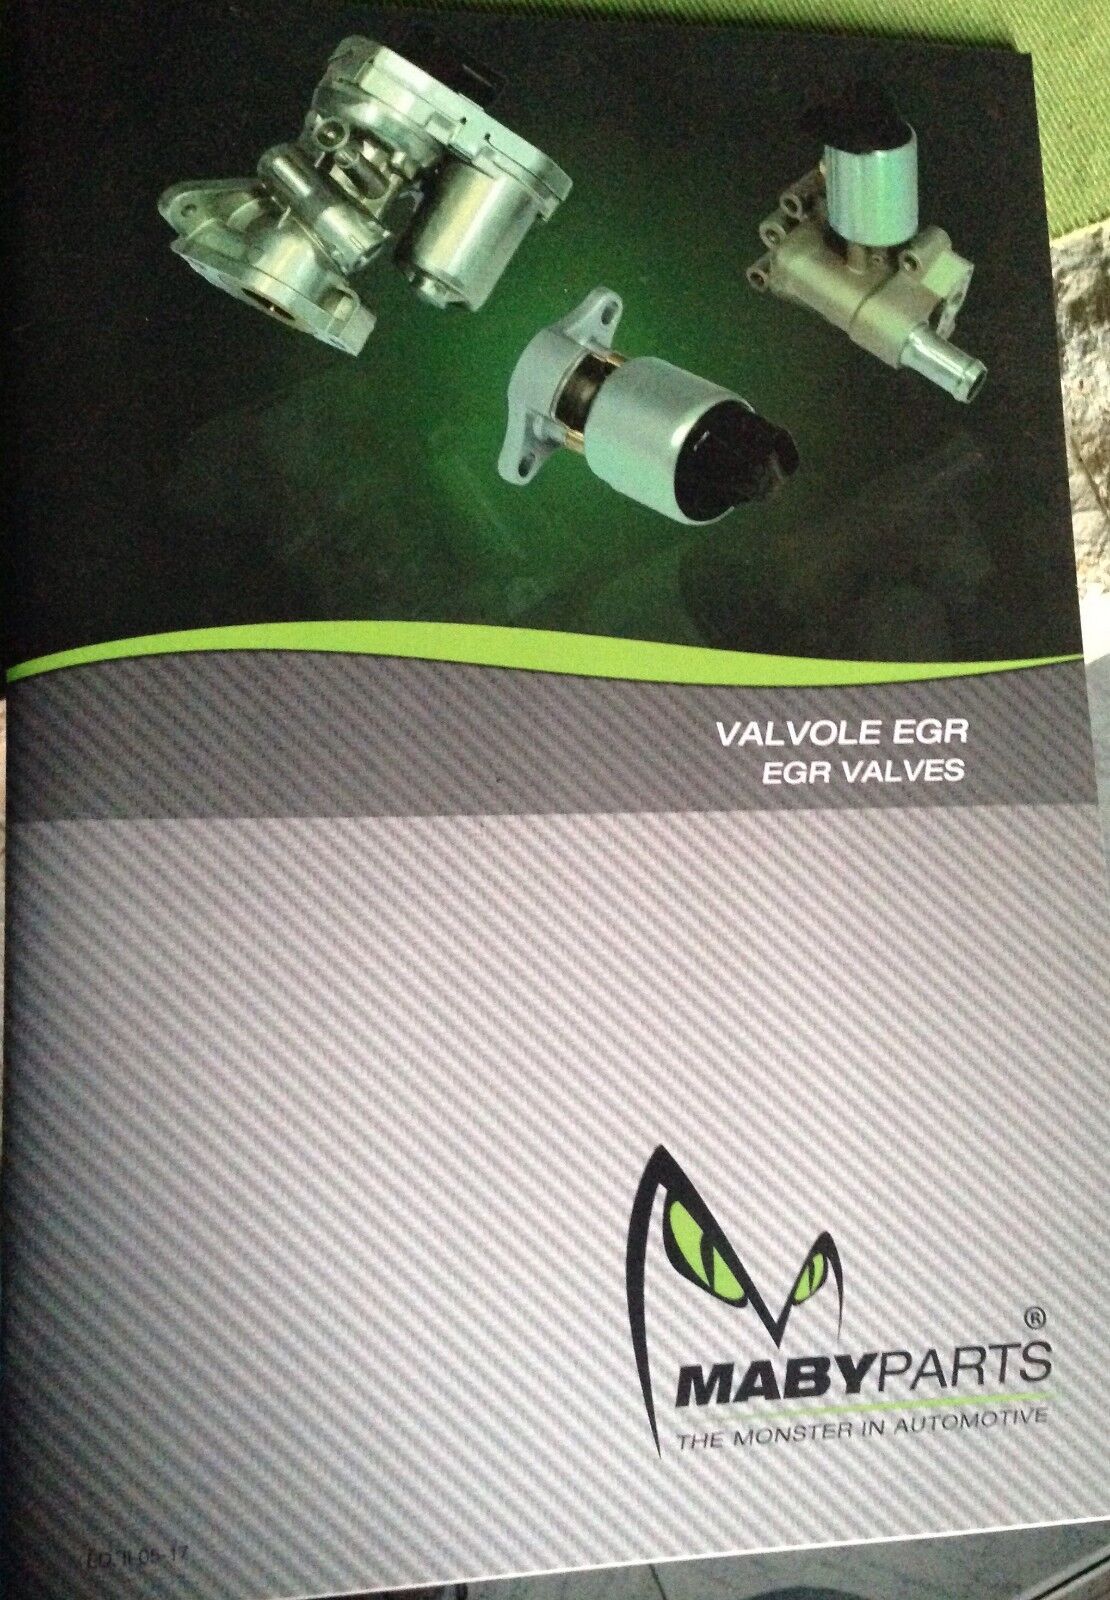 Valvole egr - AA.VV - Maby parts - 2017 - MP